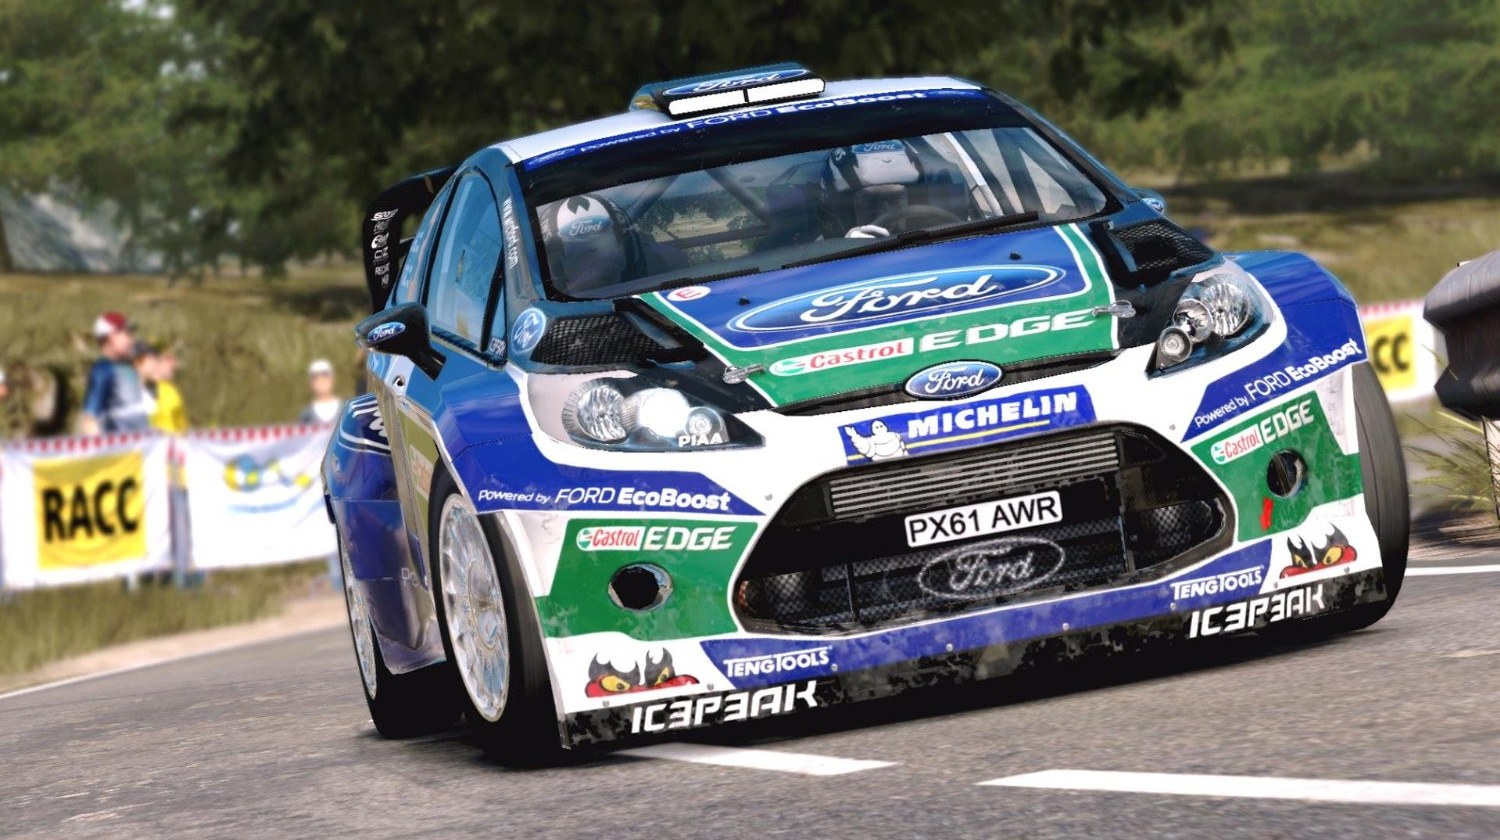 WRC 3 - Wikipedia